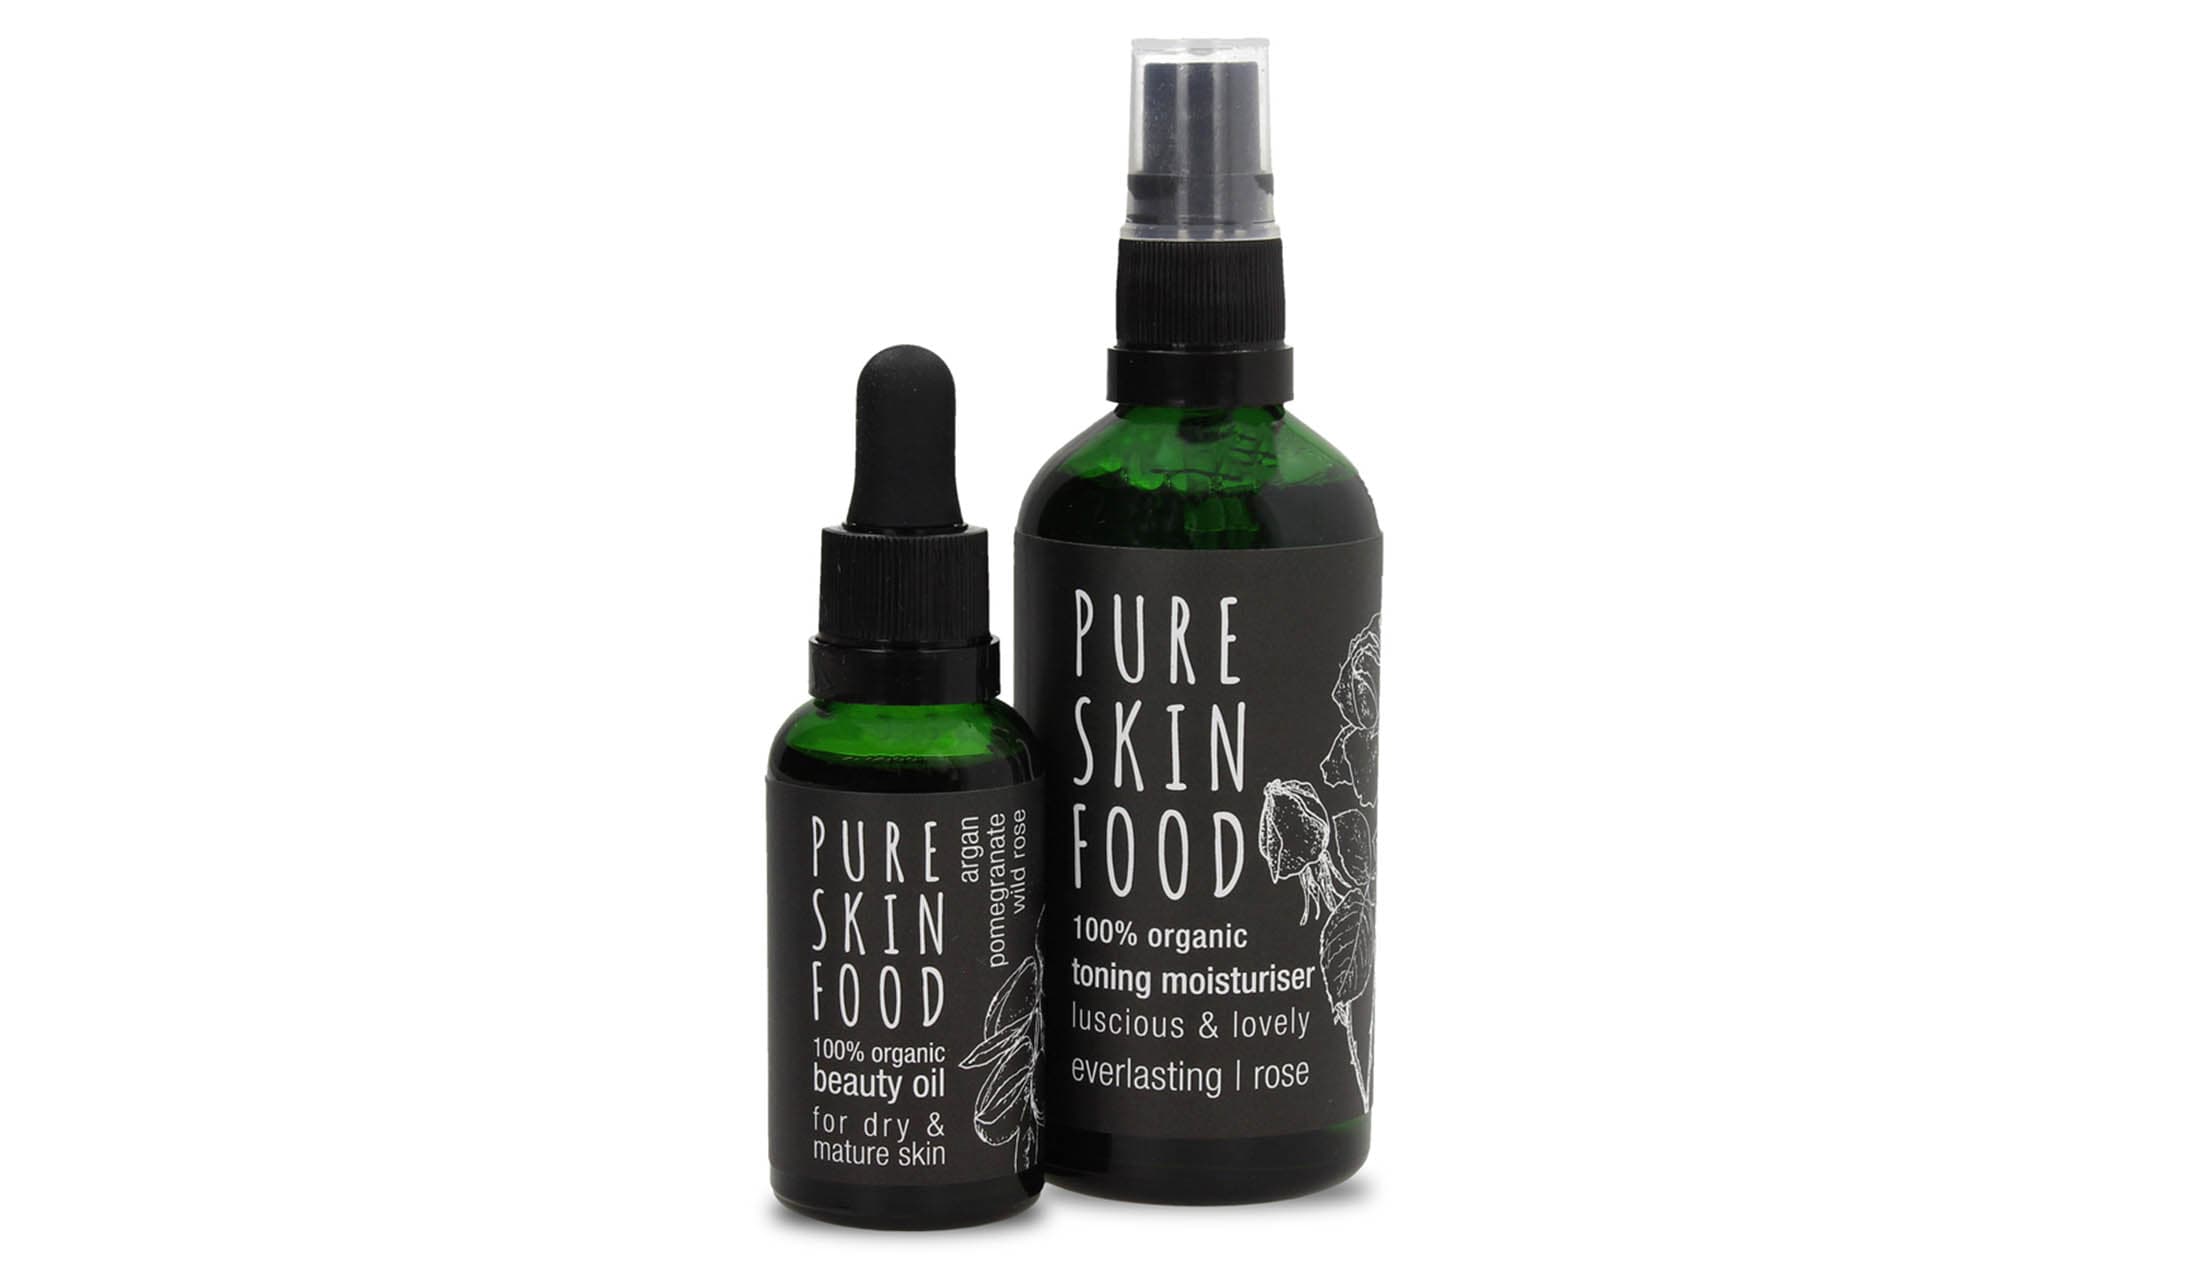 Pure Skin Food Beauty Oil Toning Moisturiser